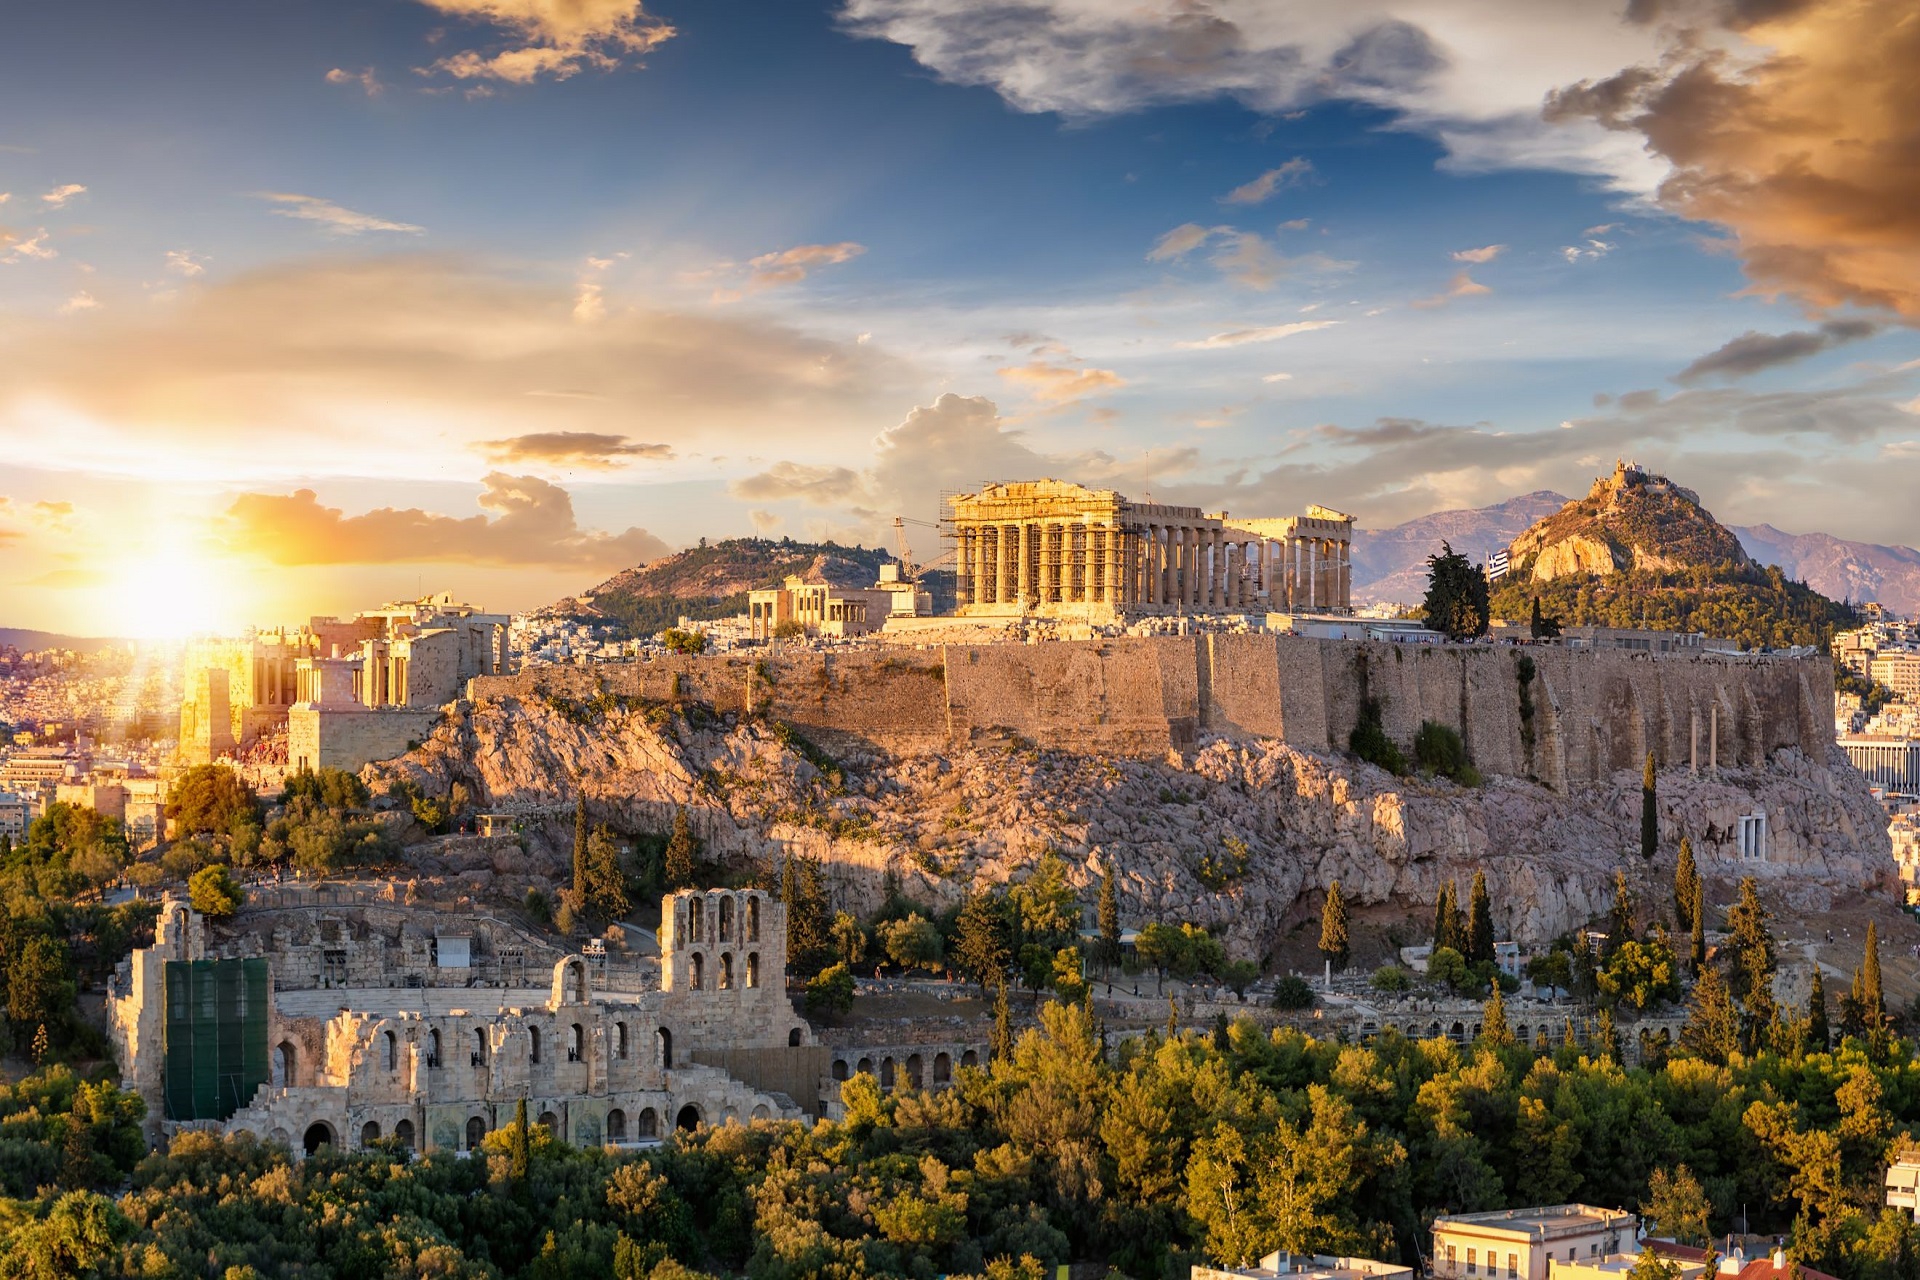 De Akropolis van Athene